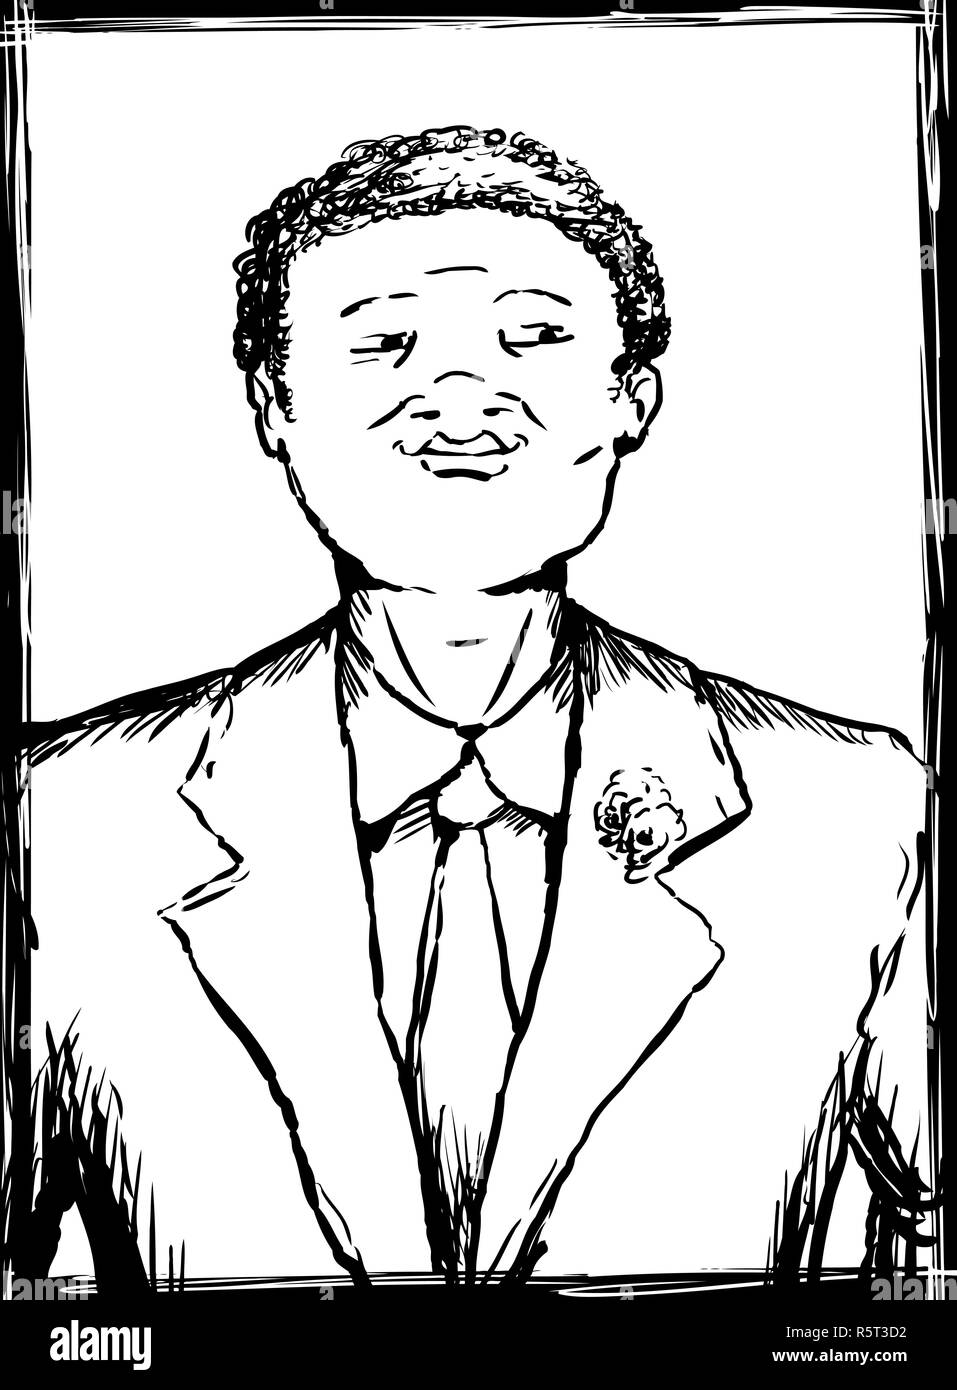 Smiling Black Teen in Suit Stock Photo